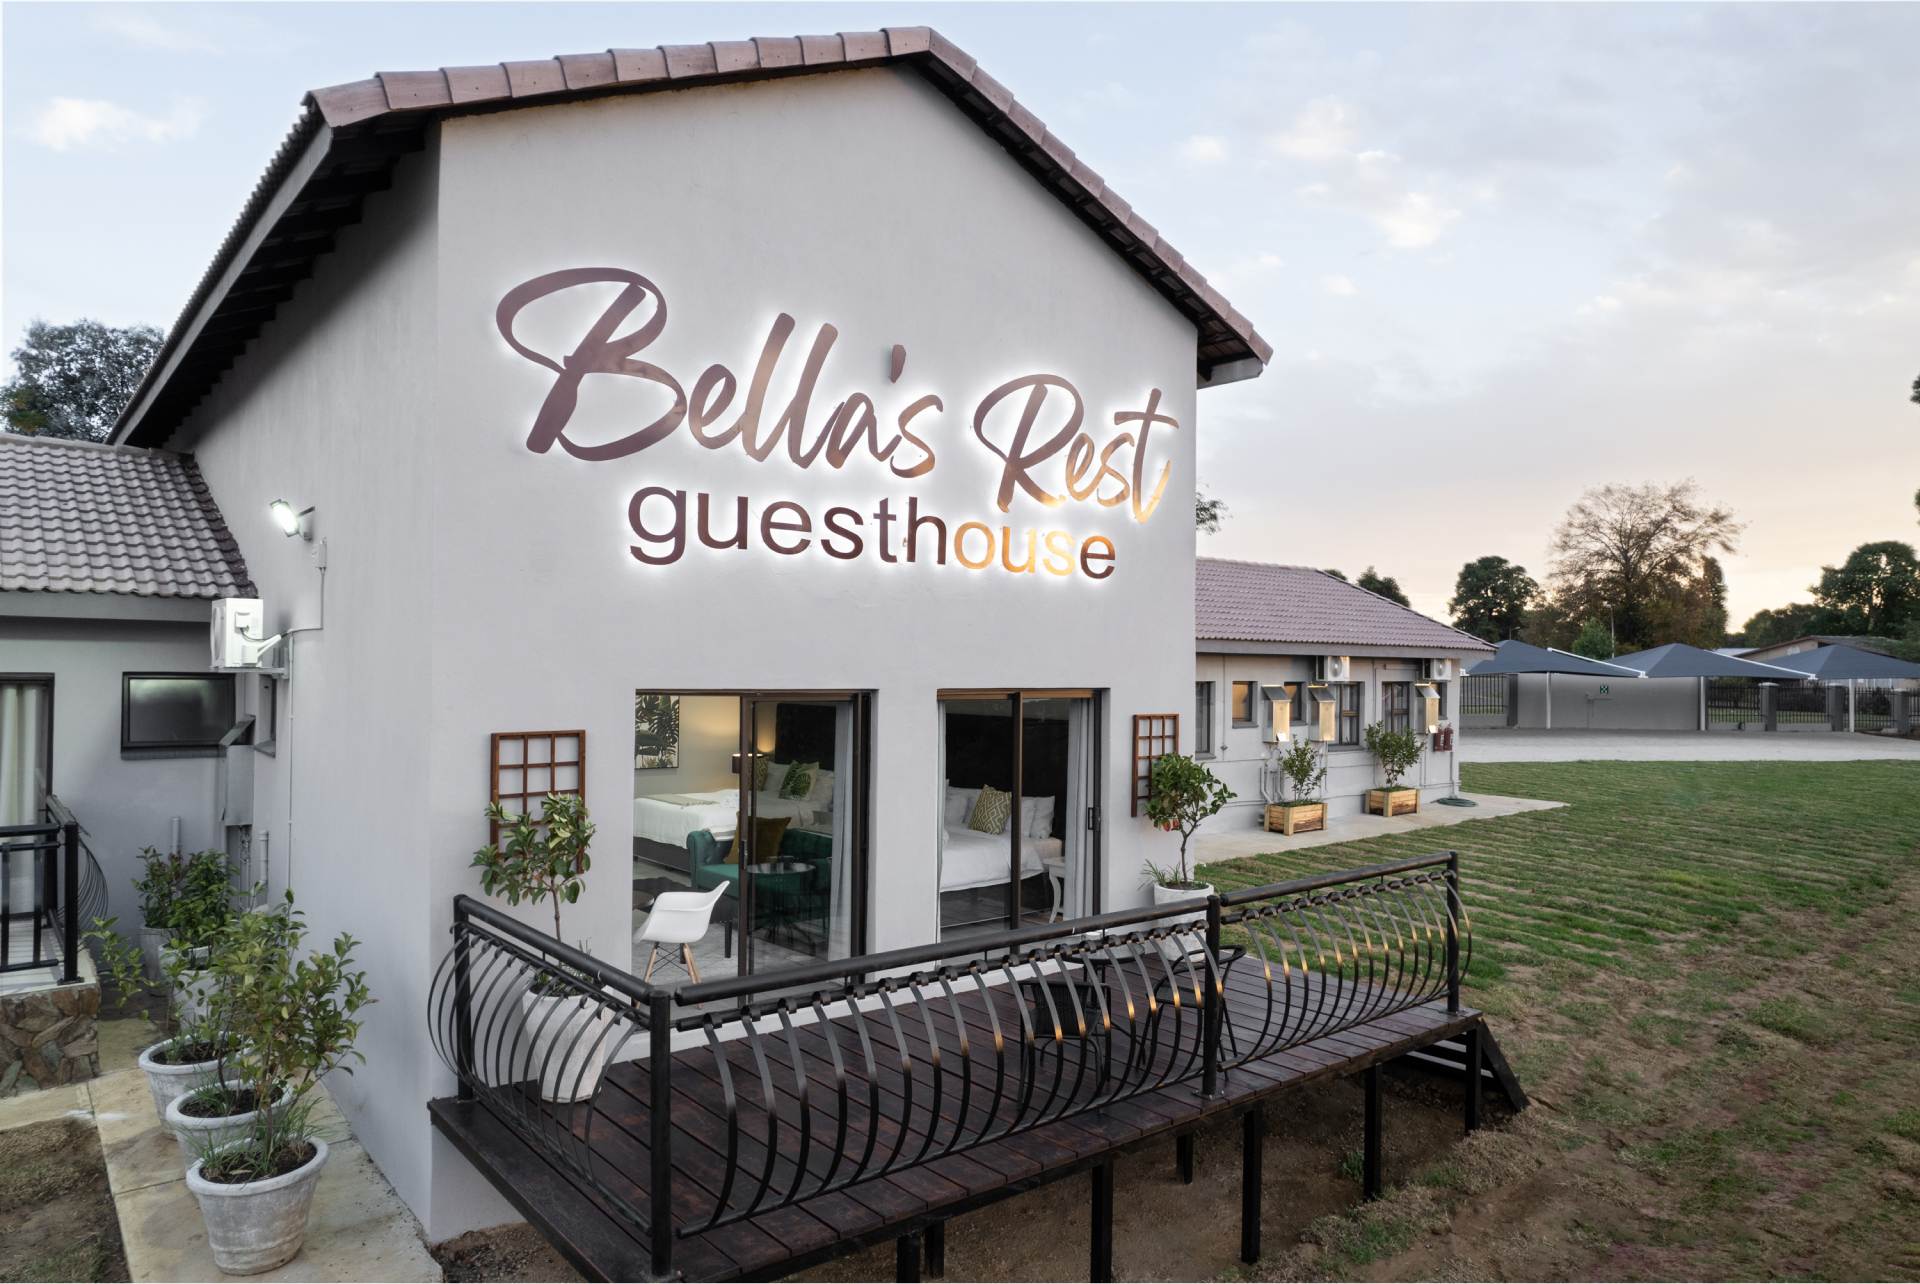 Bellas Rest Guesthouse Image (17)